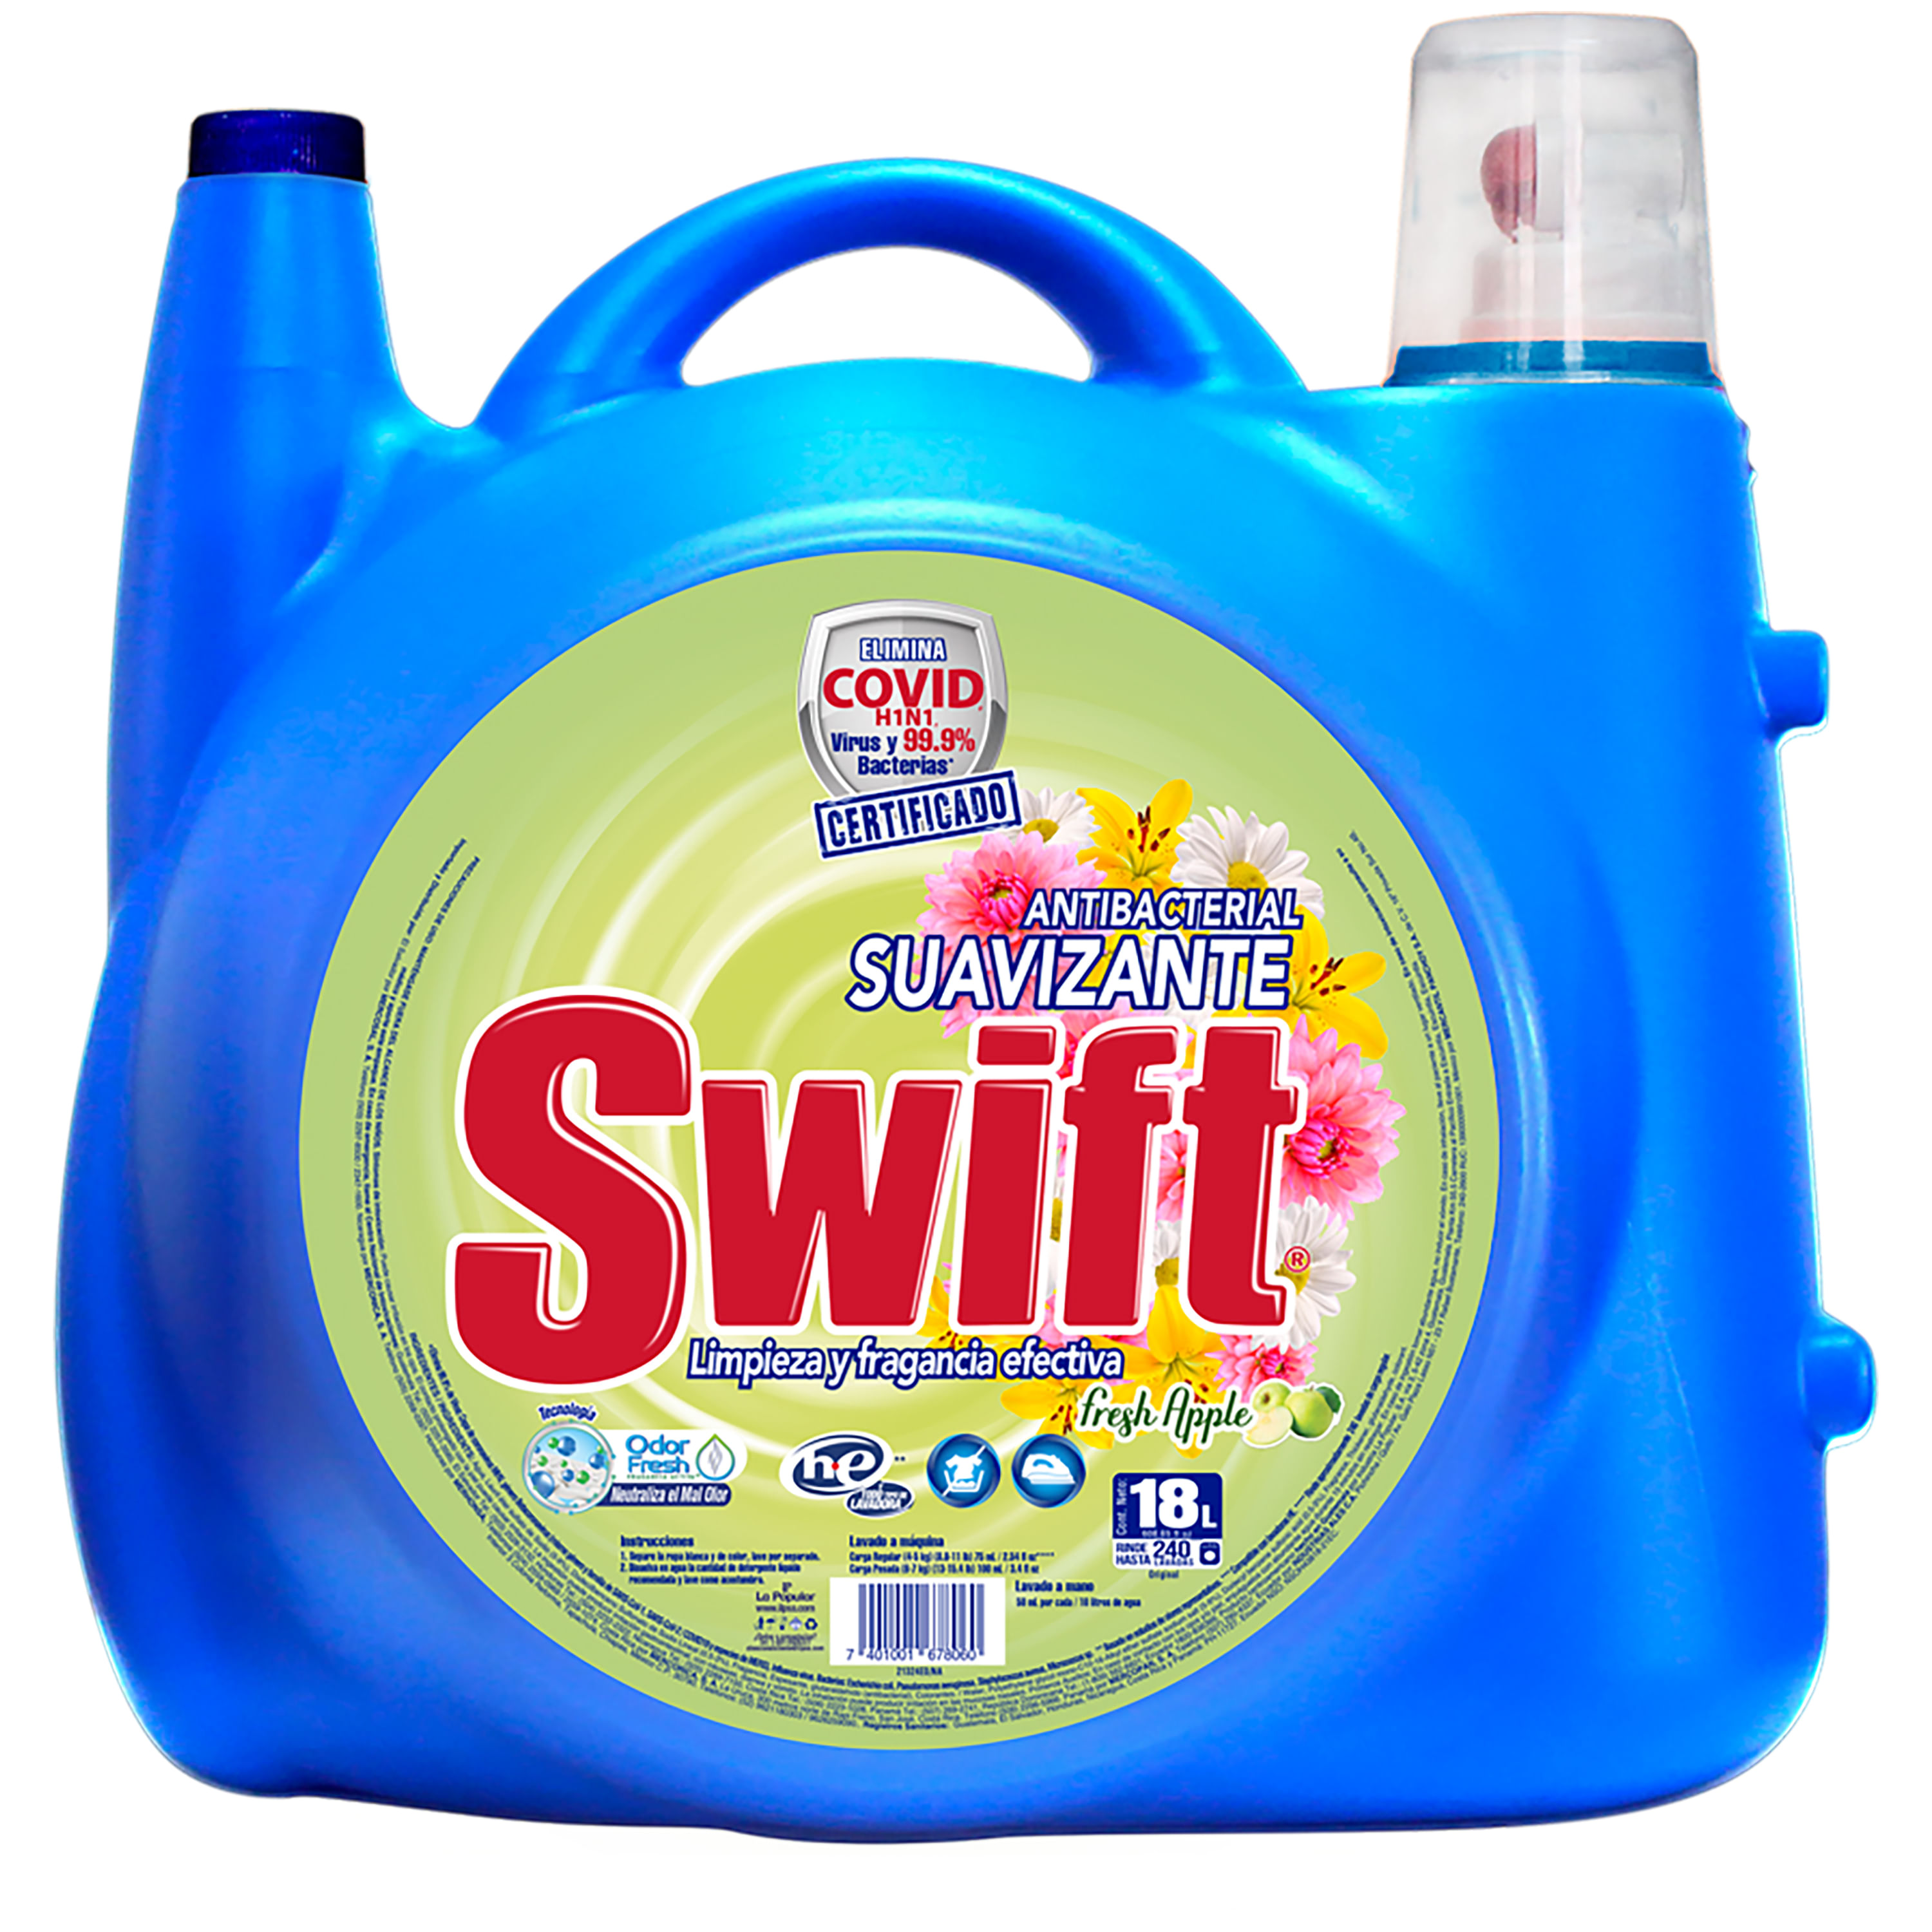 Suavizante-Swift-Fresh-Apple-18-Lts-1-6102